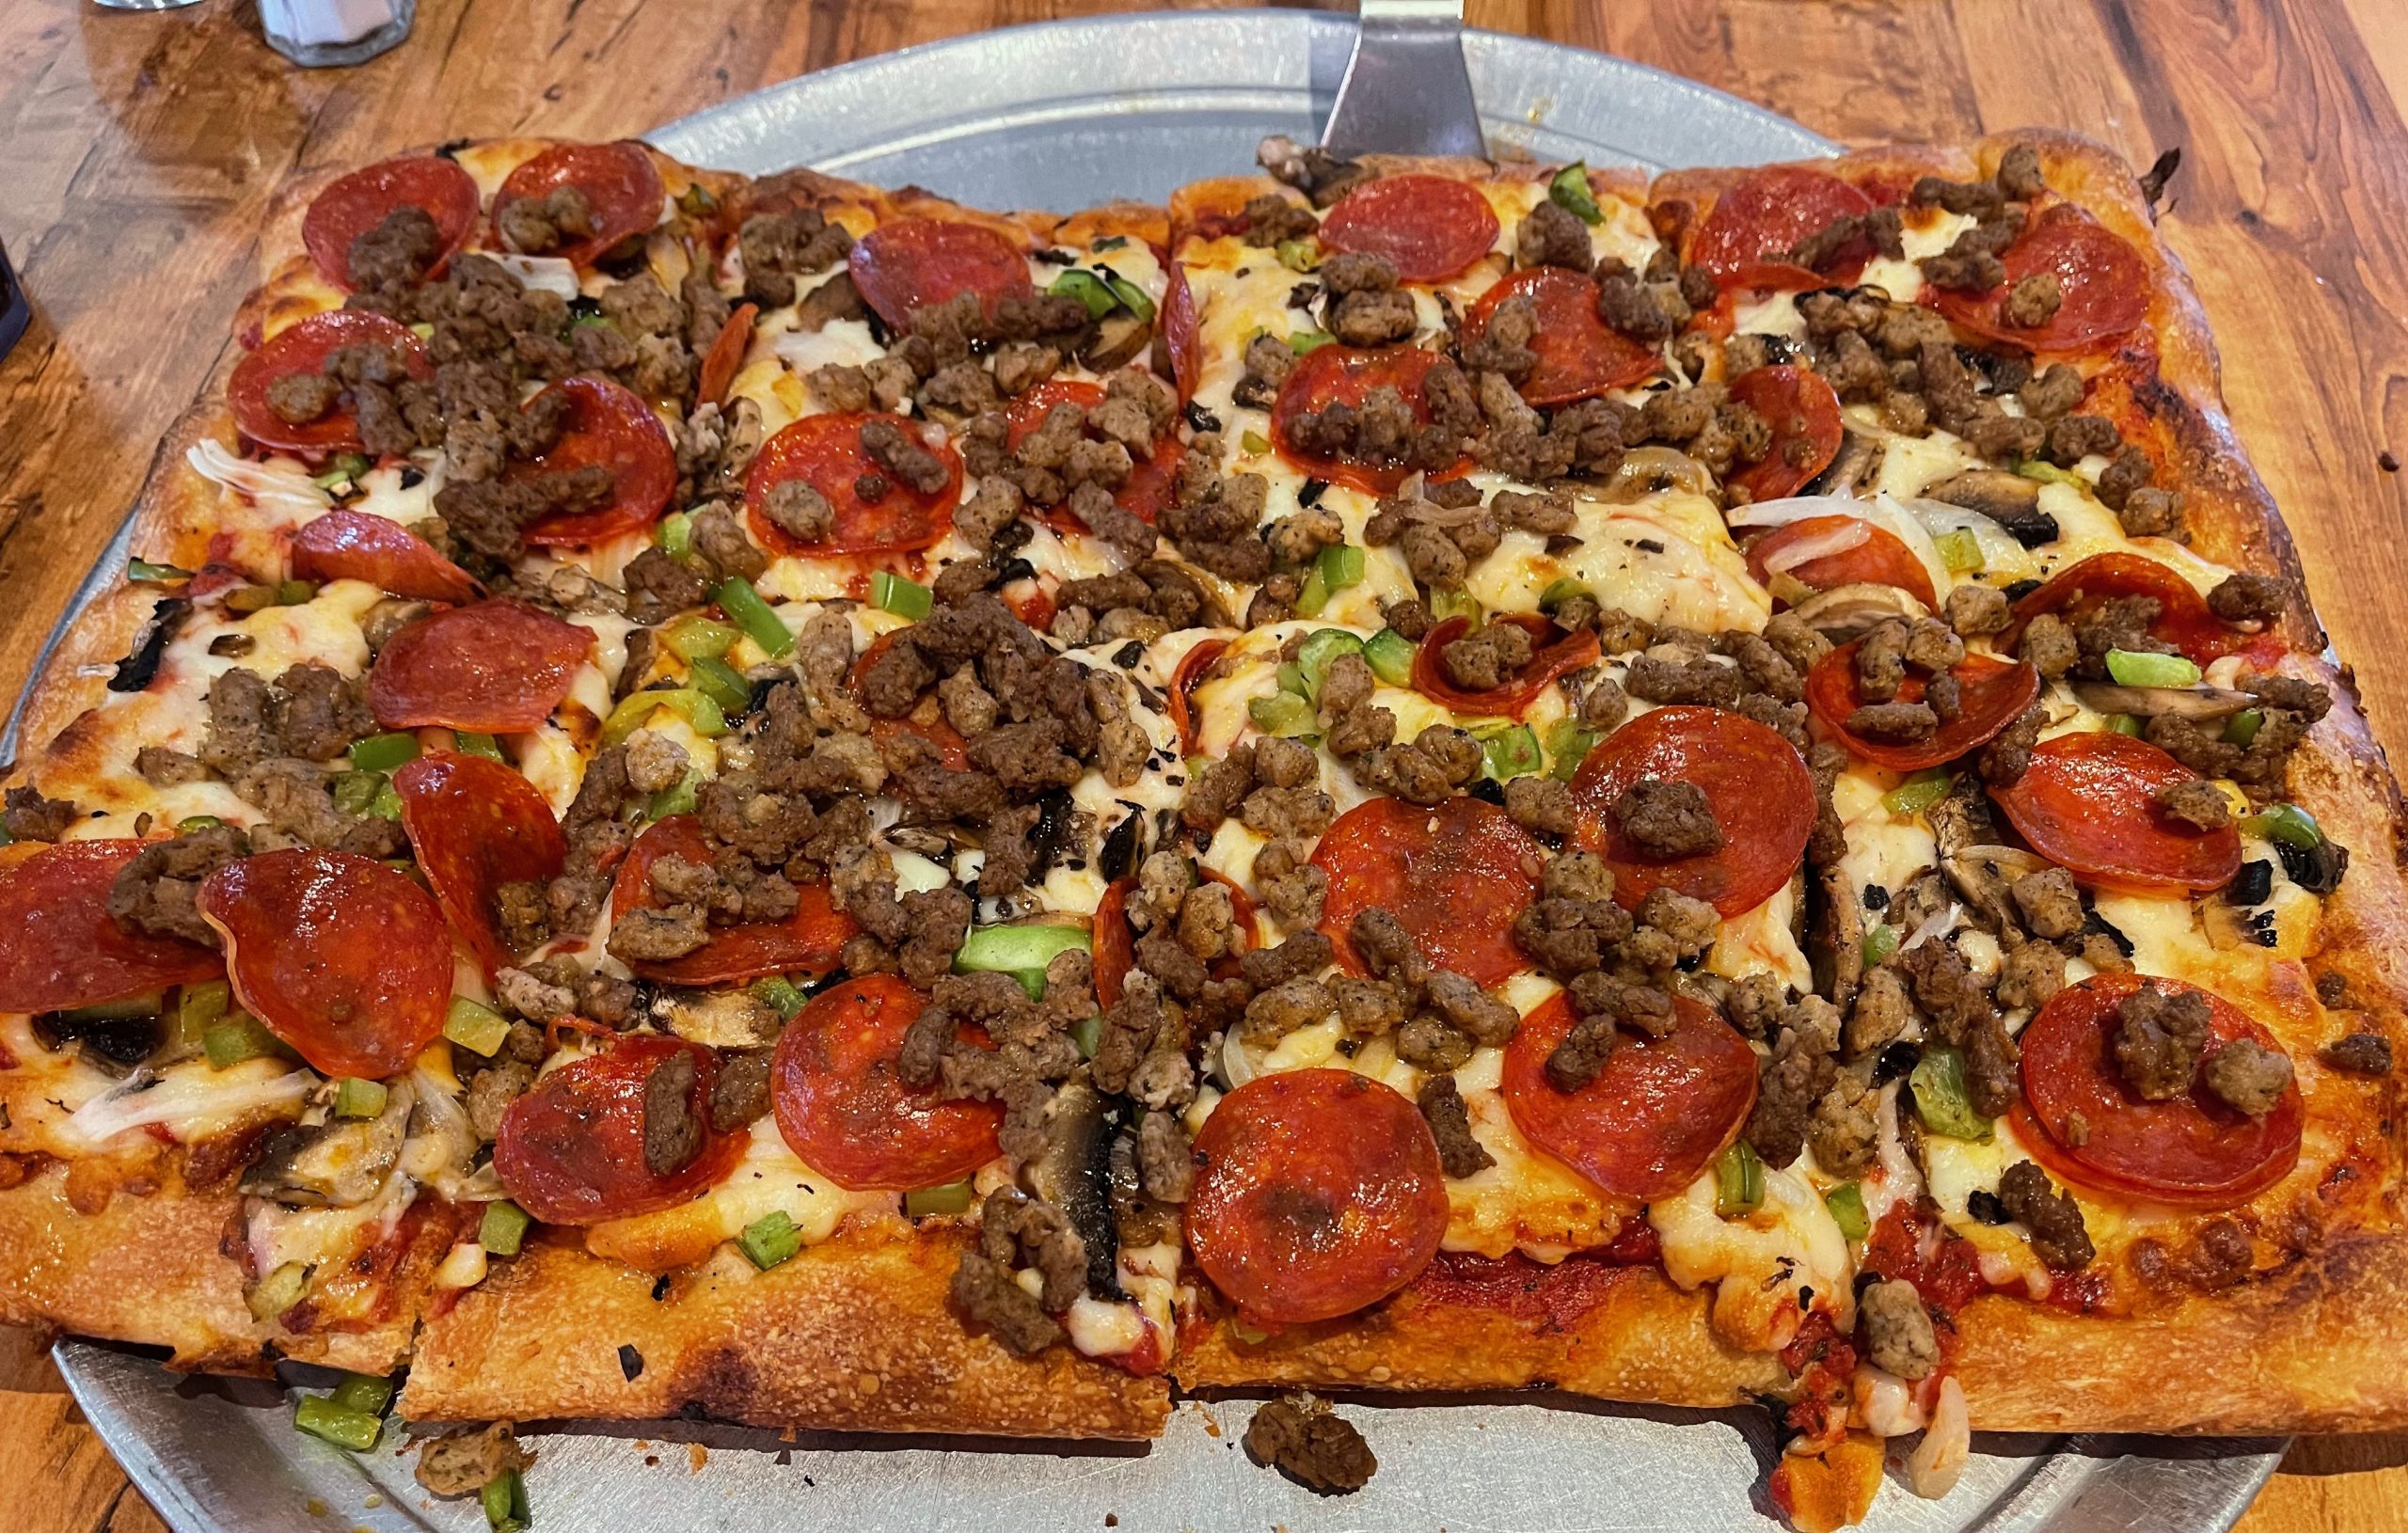 Sal’s Ristorante & Pizzeria – Albuquerque, New Mexico